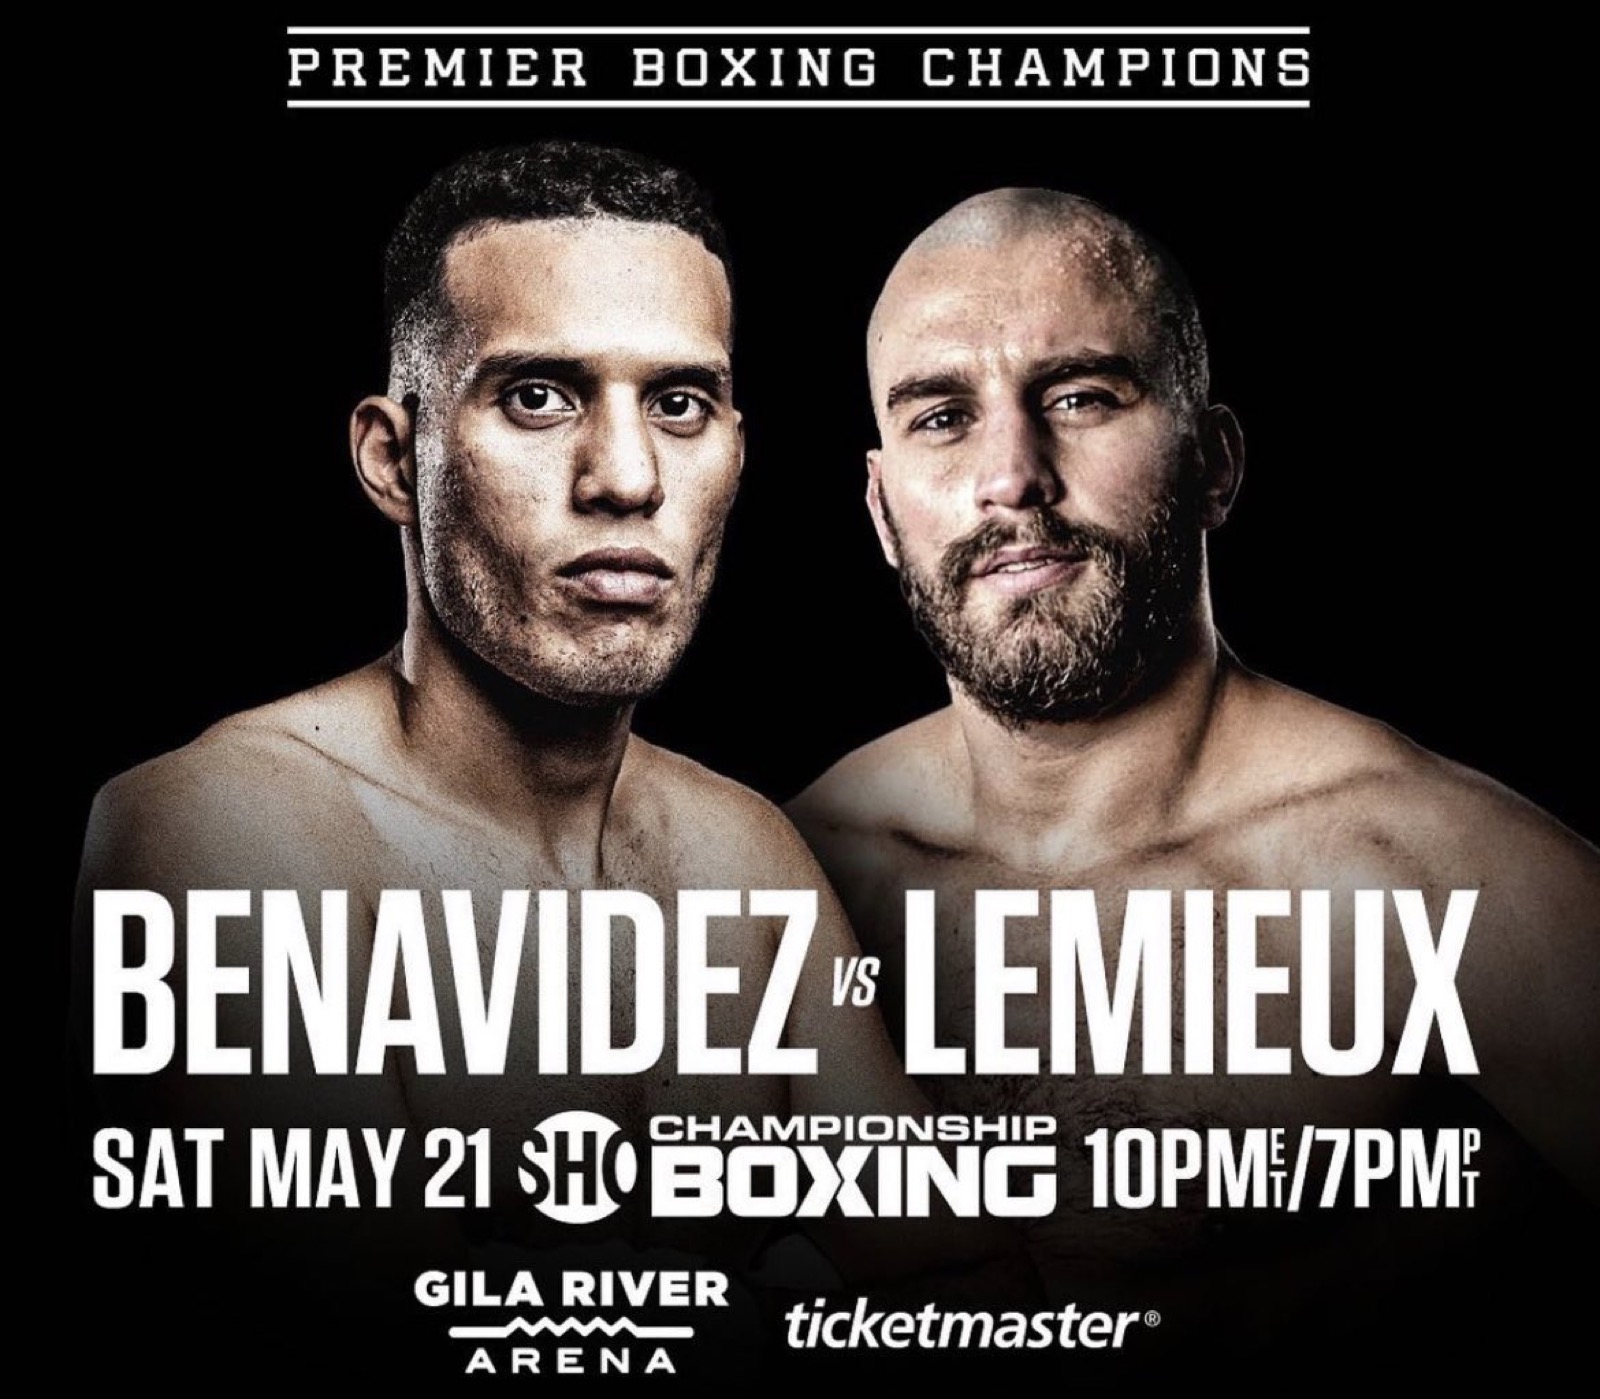 Image: David Benavidez vs. David Lemieux next Saturday, May 21 on Showtime